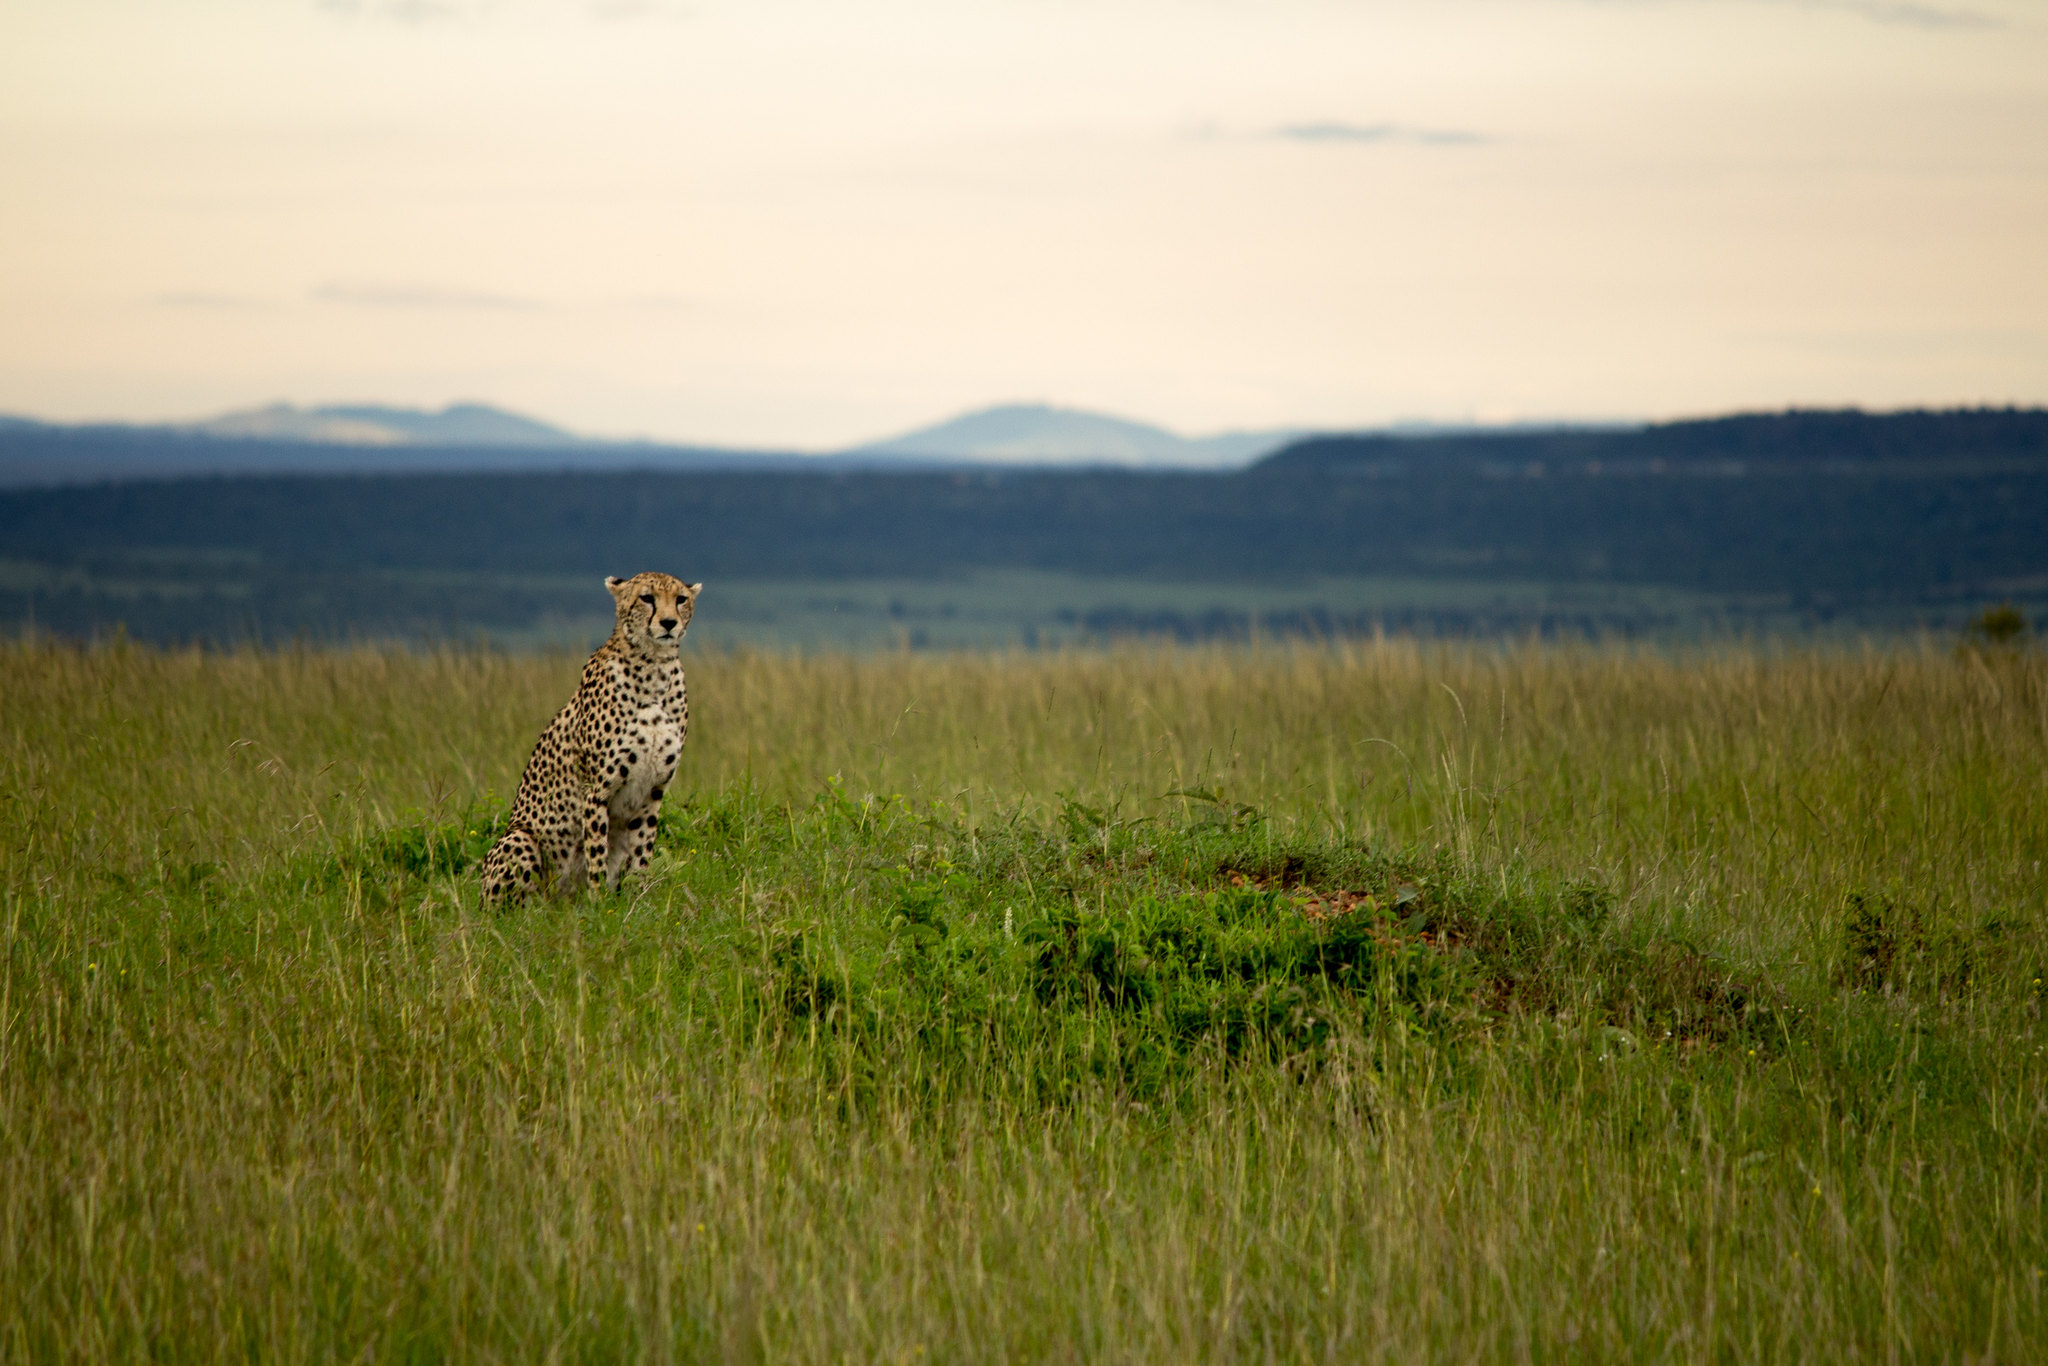 Cheetah in an open field